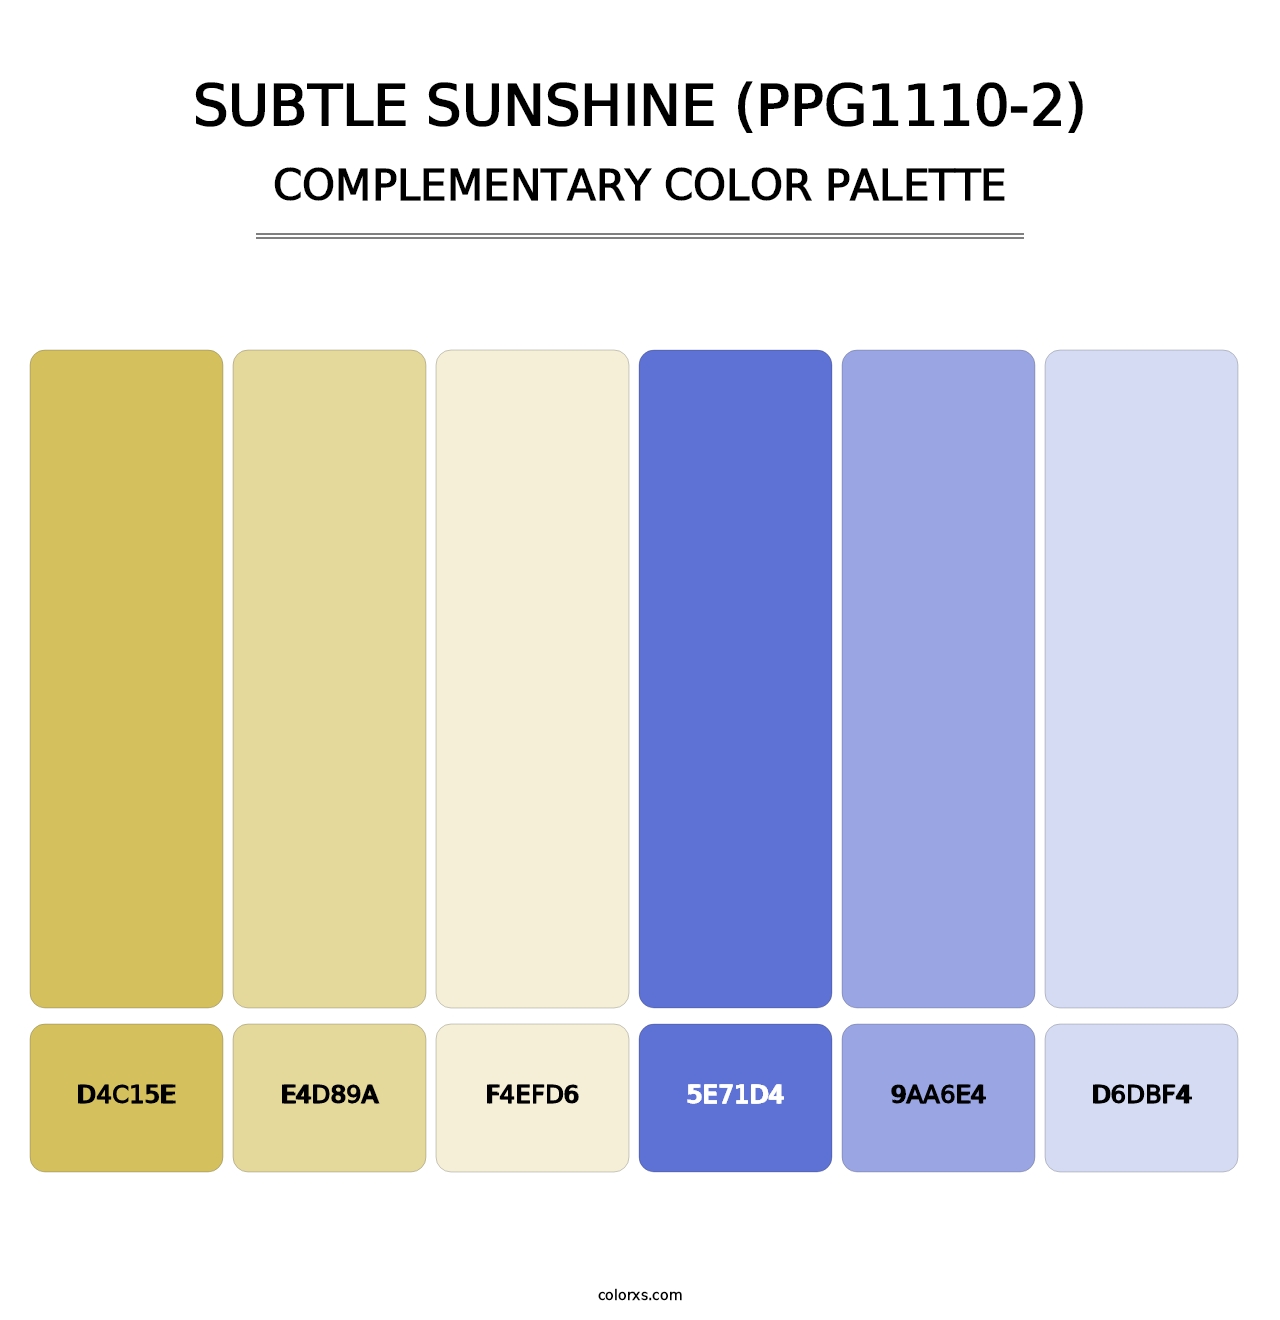 Subtle Sunshine (PPG1110-2) - Complementary Color Palette